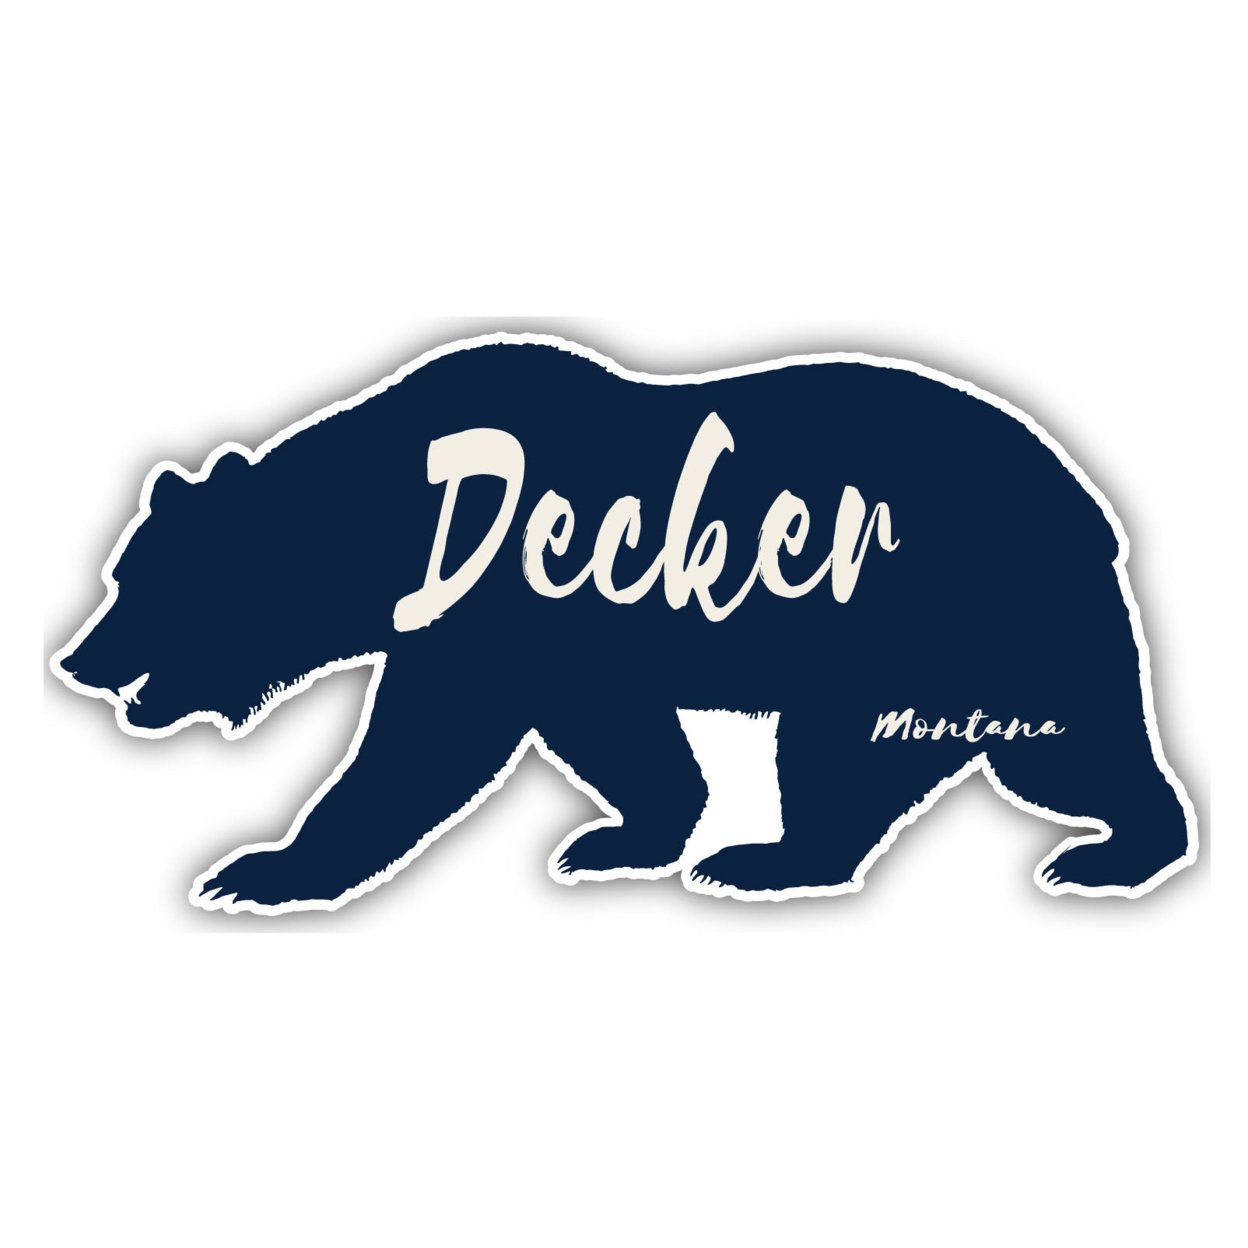 Decker Montana Souvenir Decorative Stickers (Choose Theme And Size) - Single Unit, 10-Inch, Bear